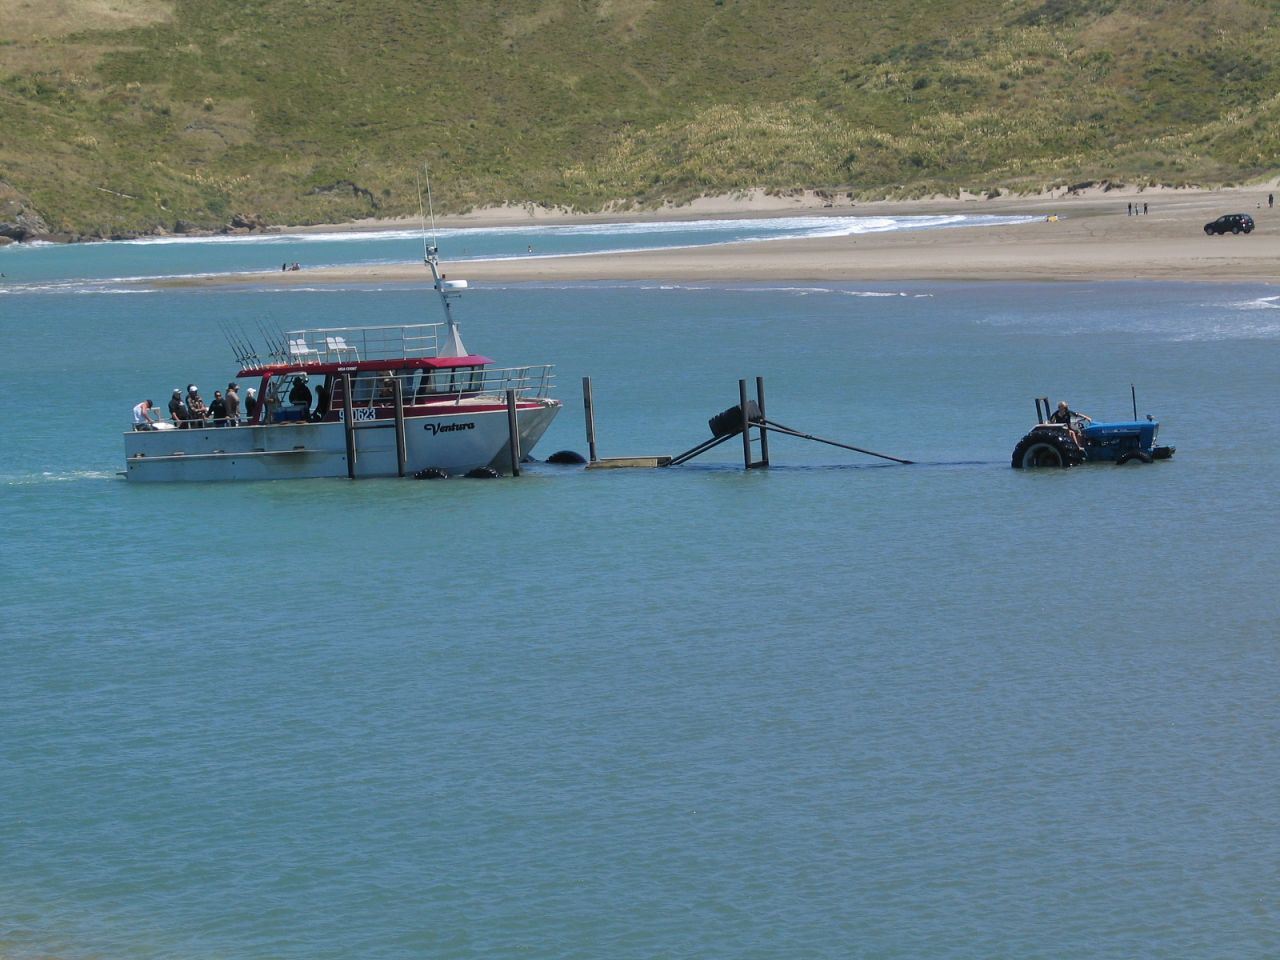 fotka / image Castlepoint: tahani lodi z vody, New Zealand